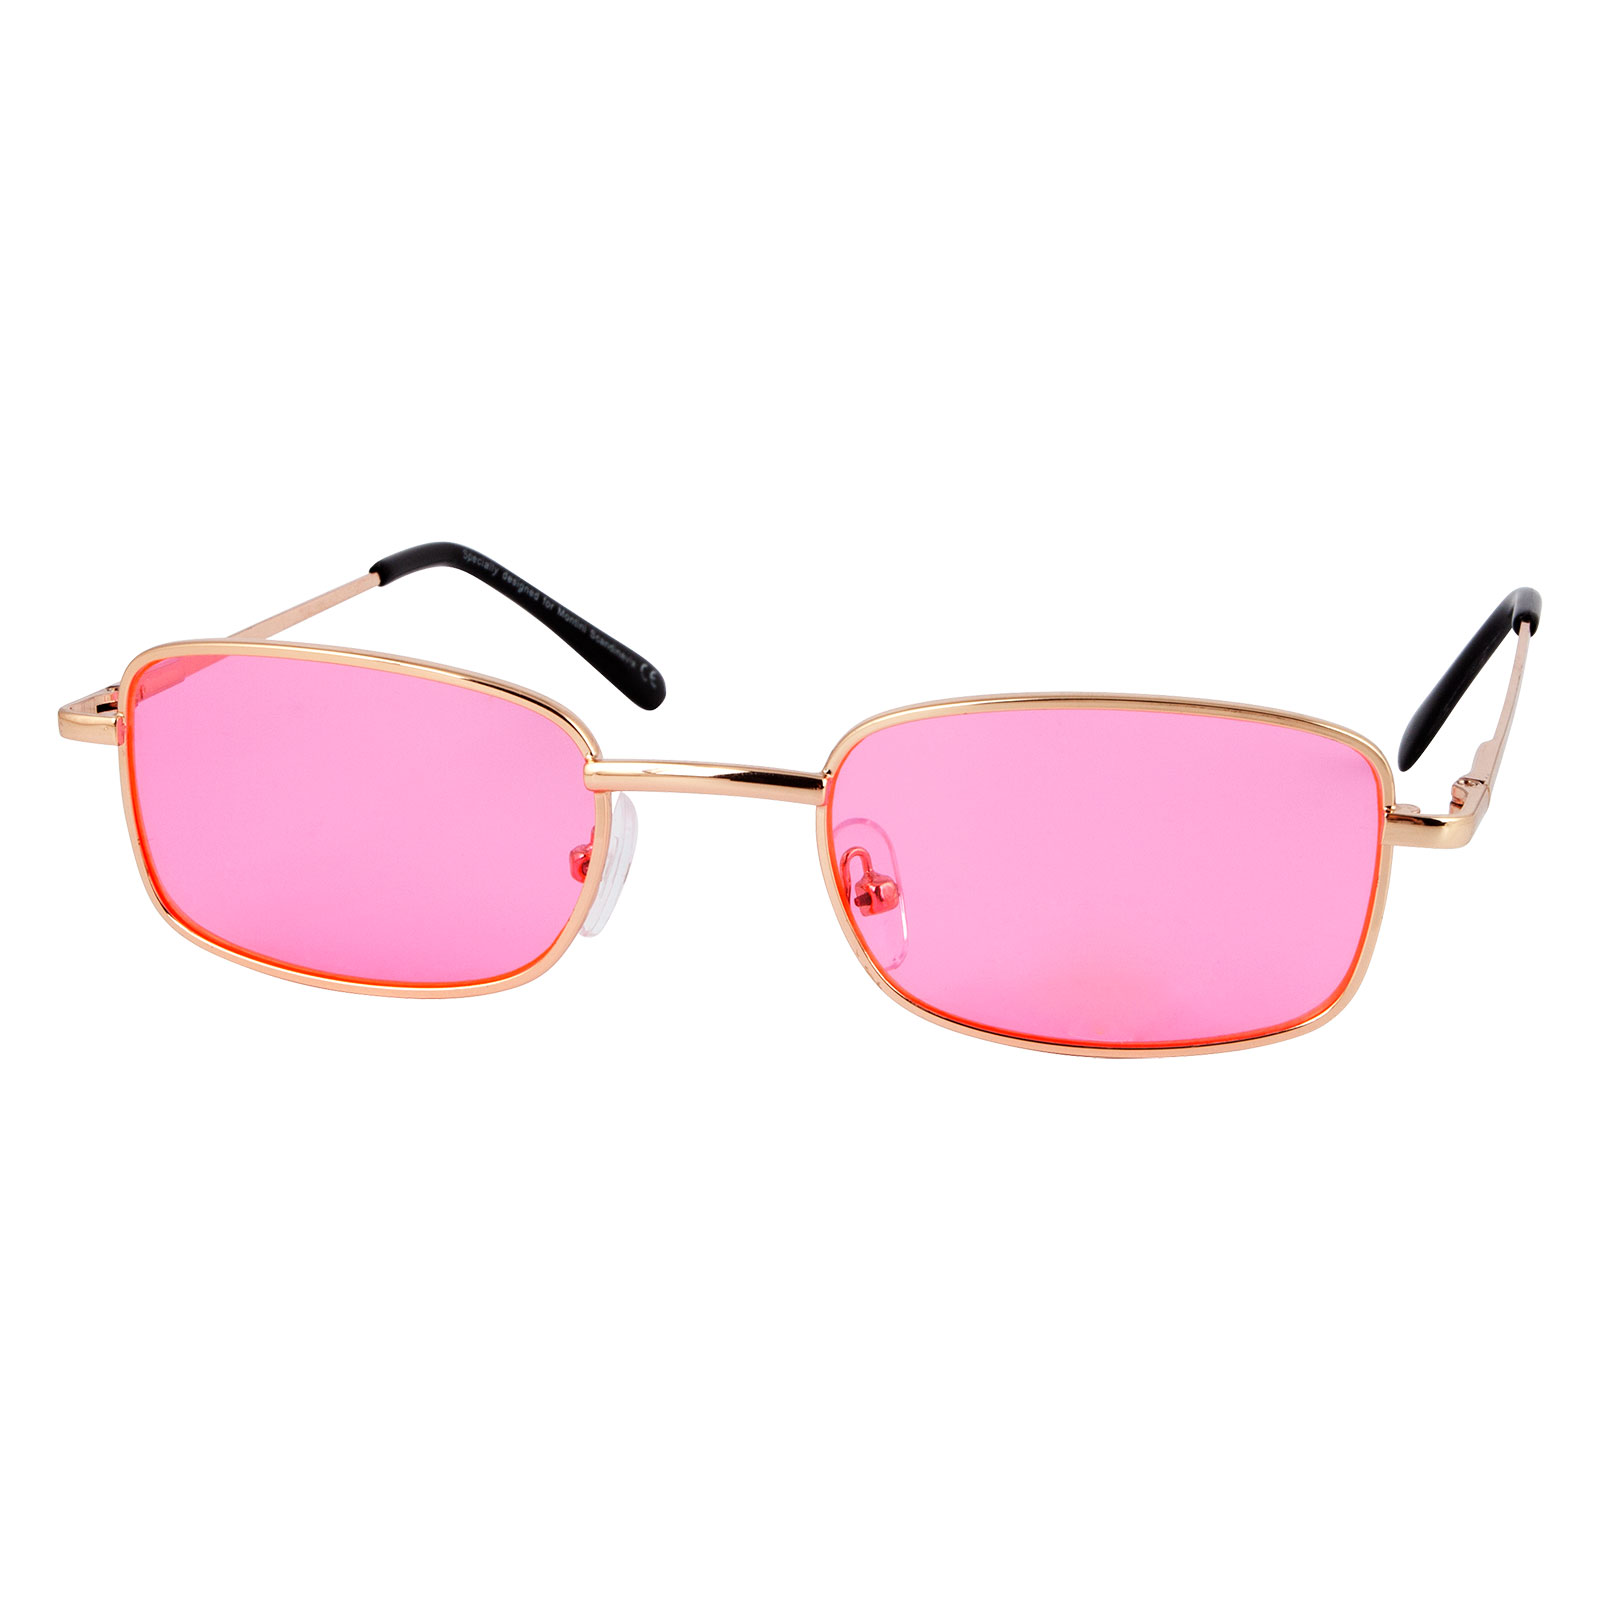 Solglasögon rosa fyrkantiga